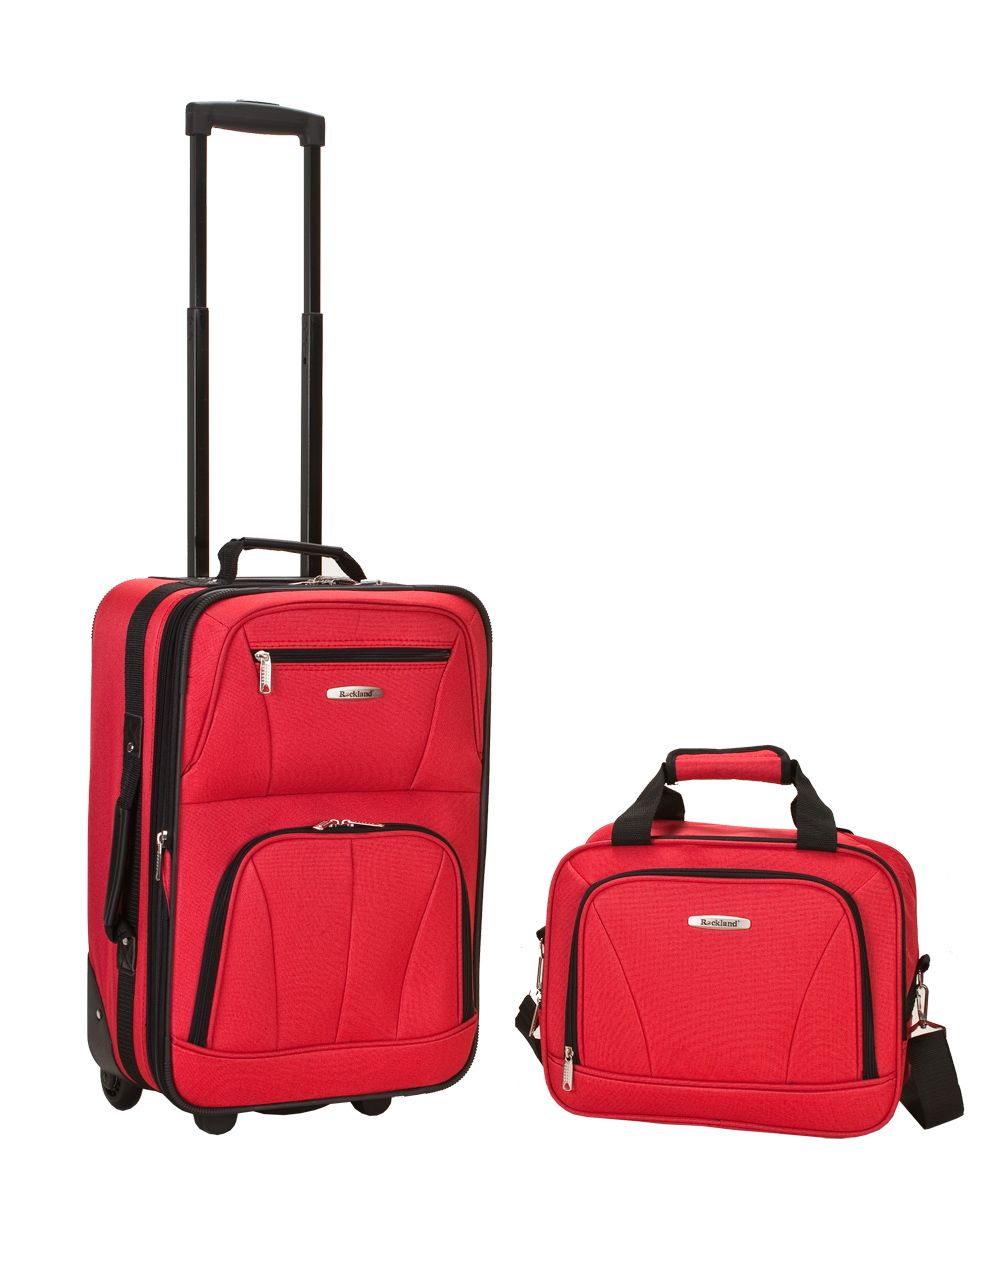 Rockland Fox Luggage 2 PC RED LUGGAGE SET